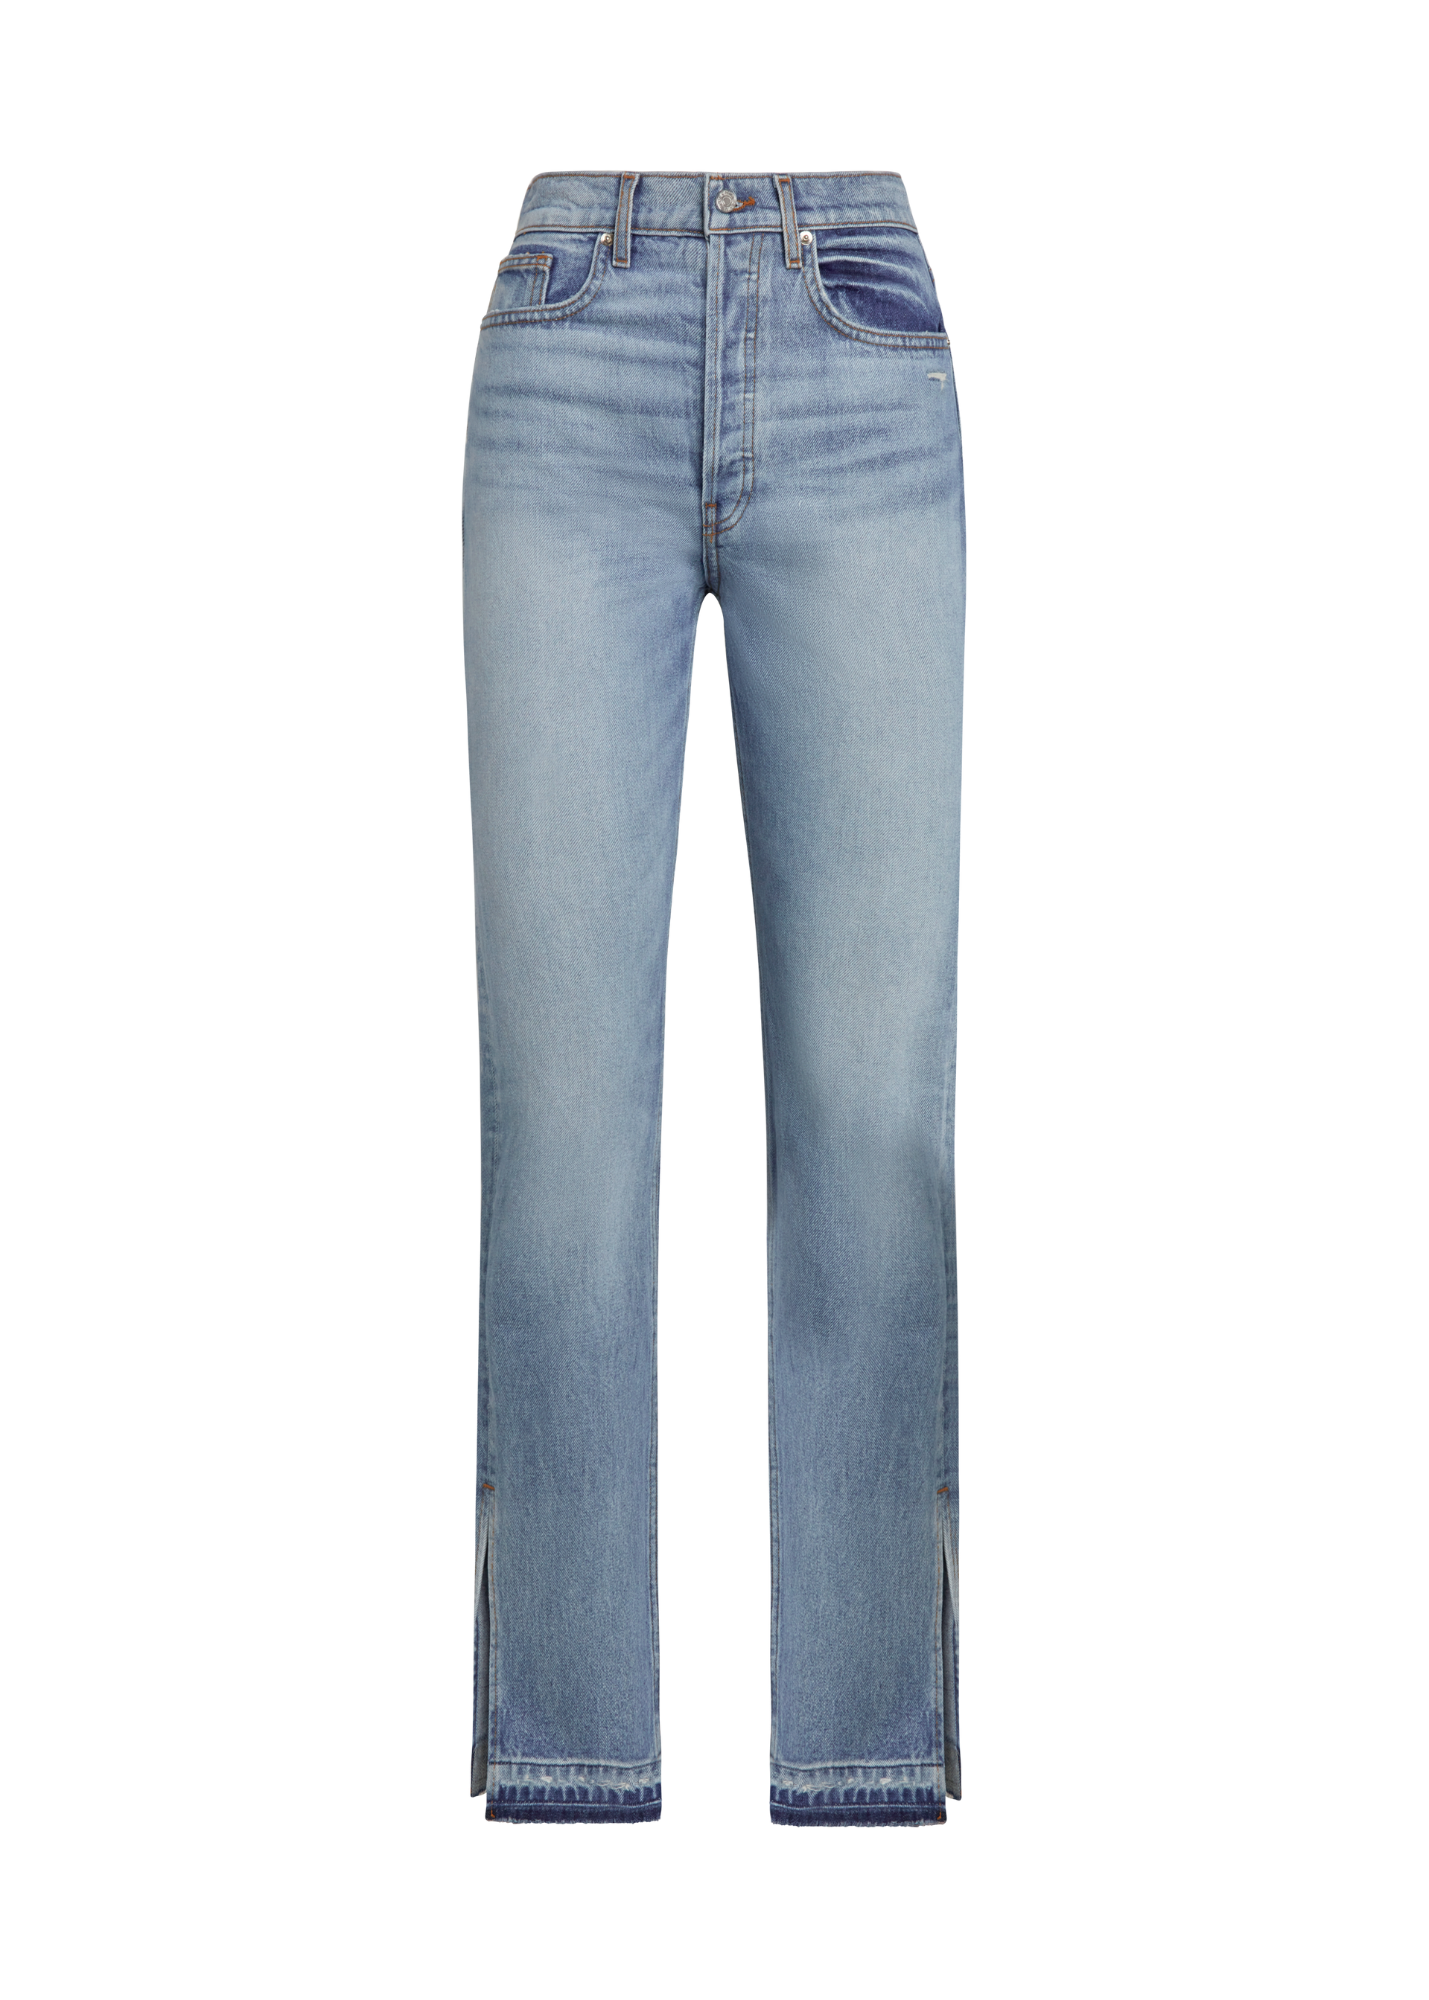 Buy Blue Jeans for Men by BREAKPOINT Online | Ajio.com